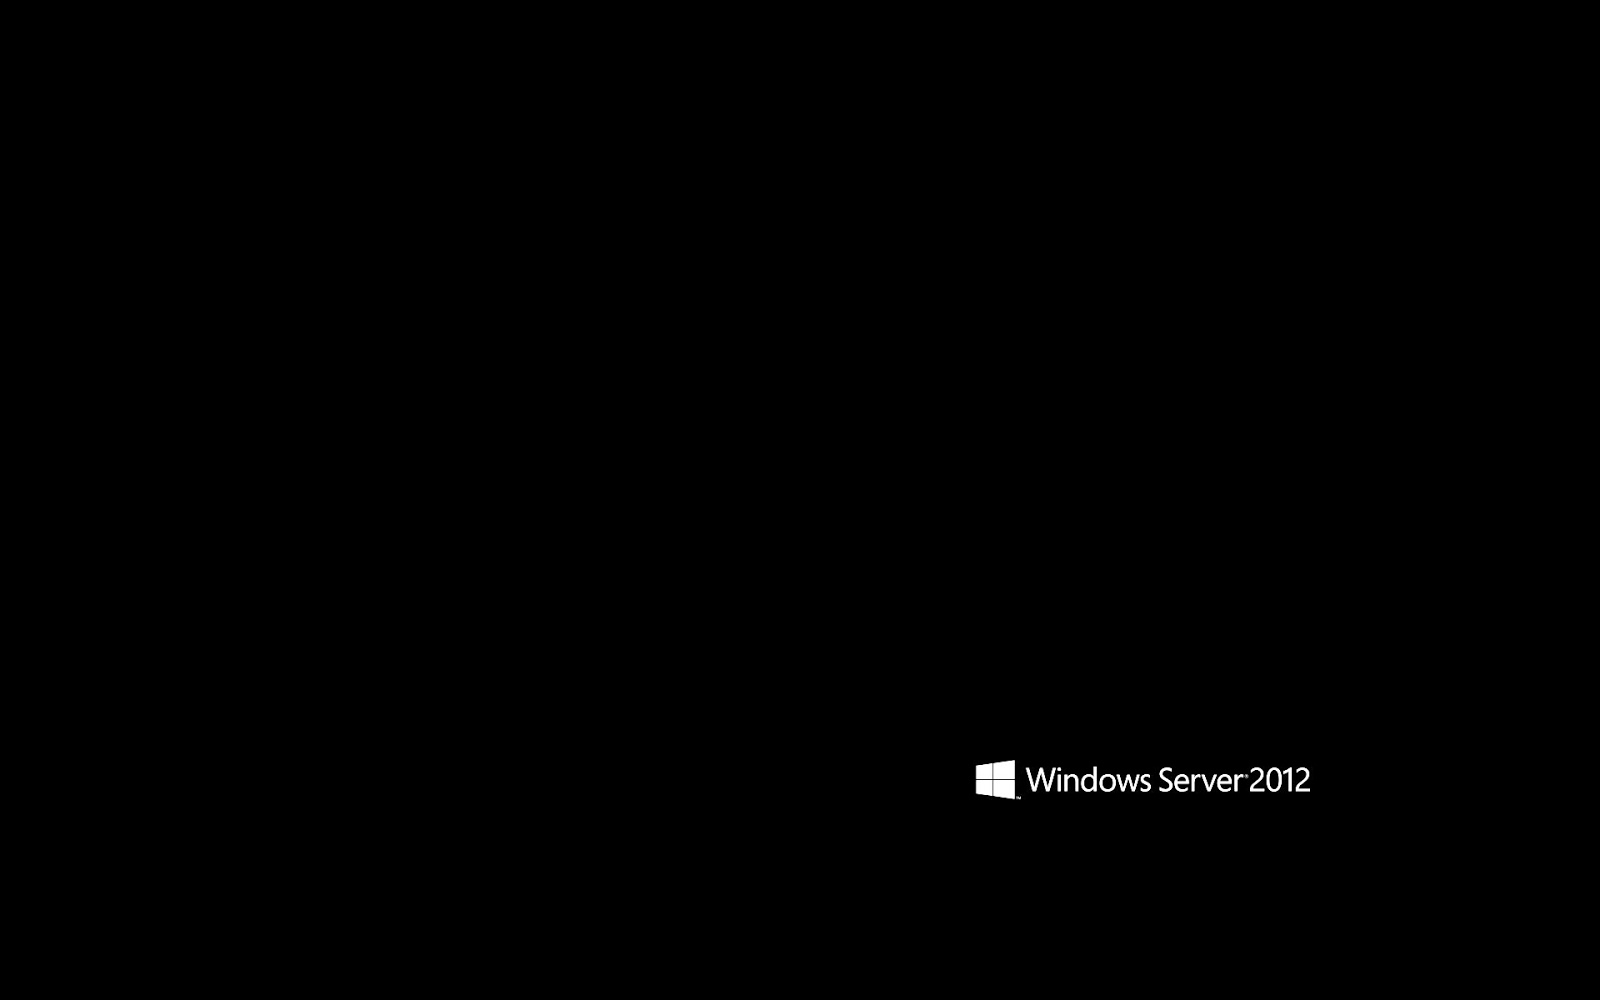 Windows Server 2012 Wallpaper Collection Windows Server